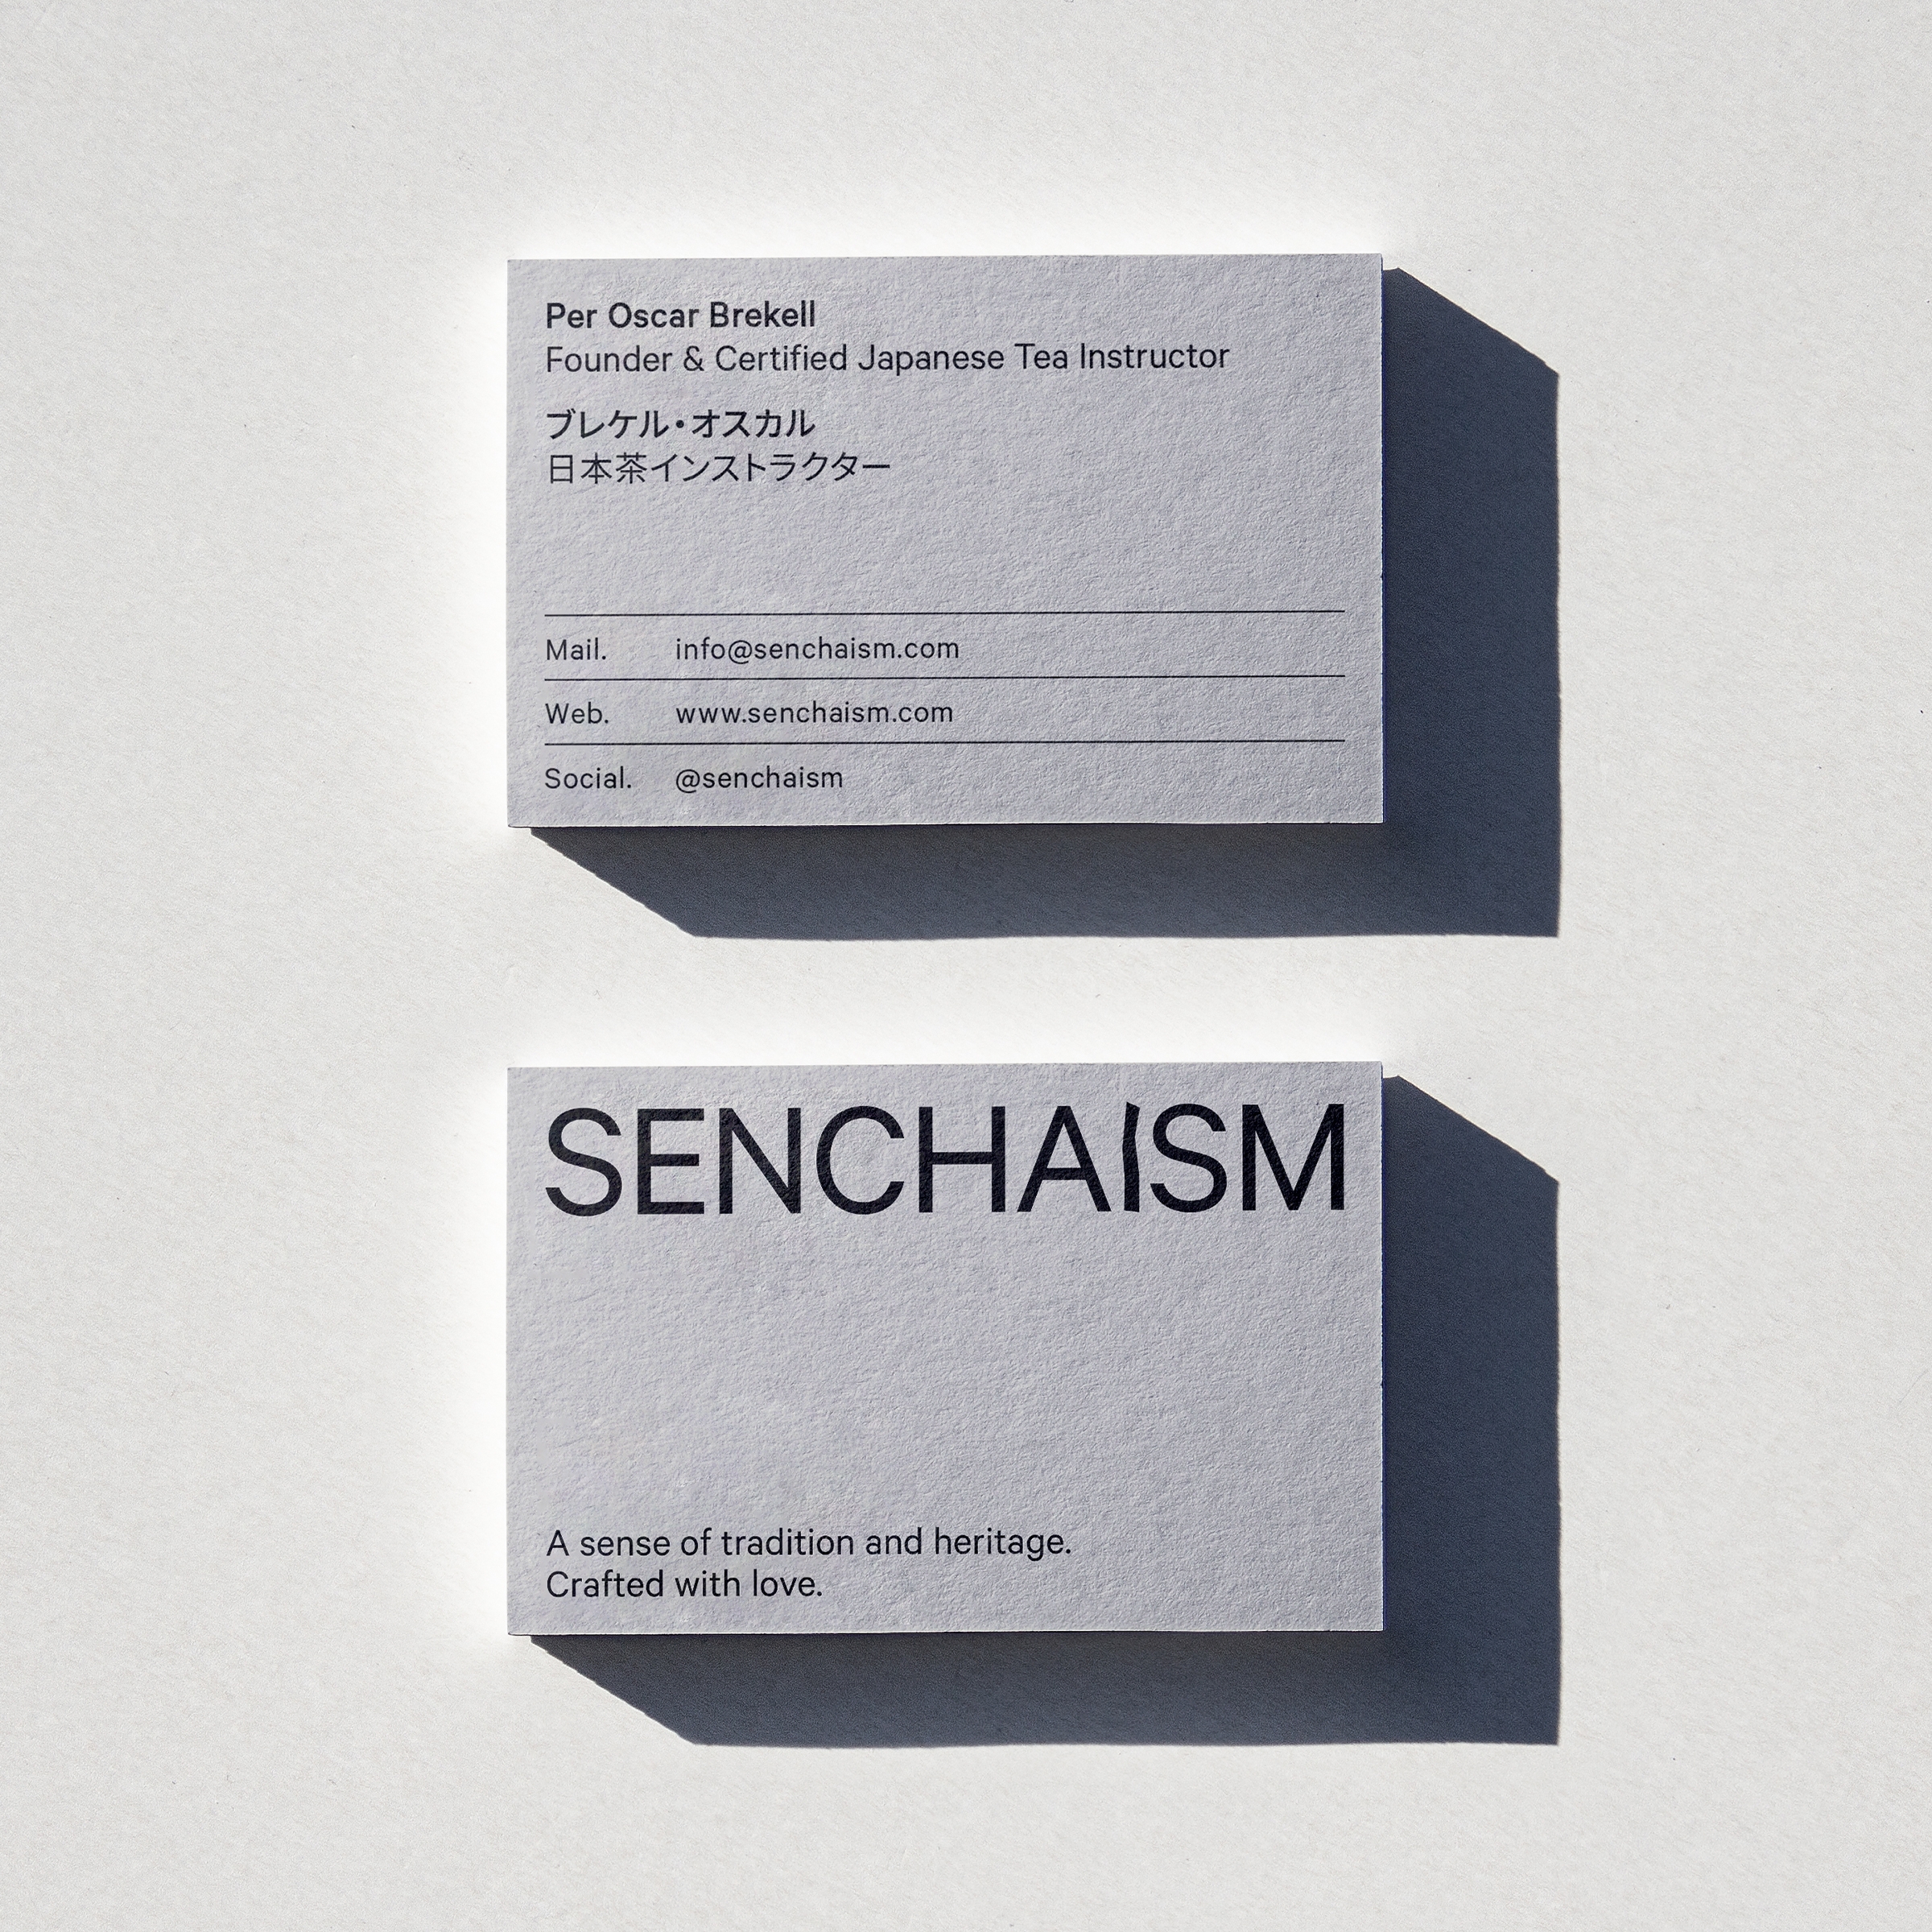 Business card concept for Senchaism